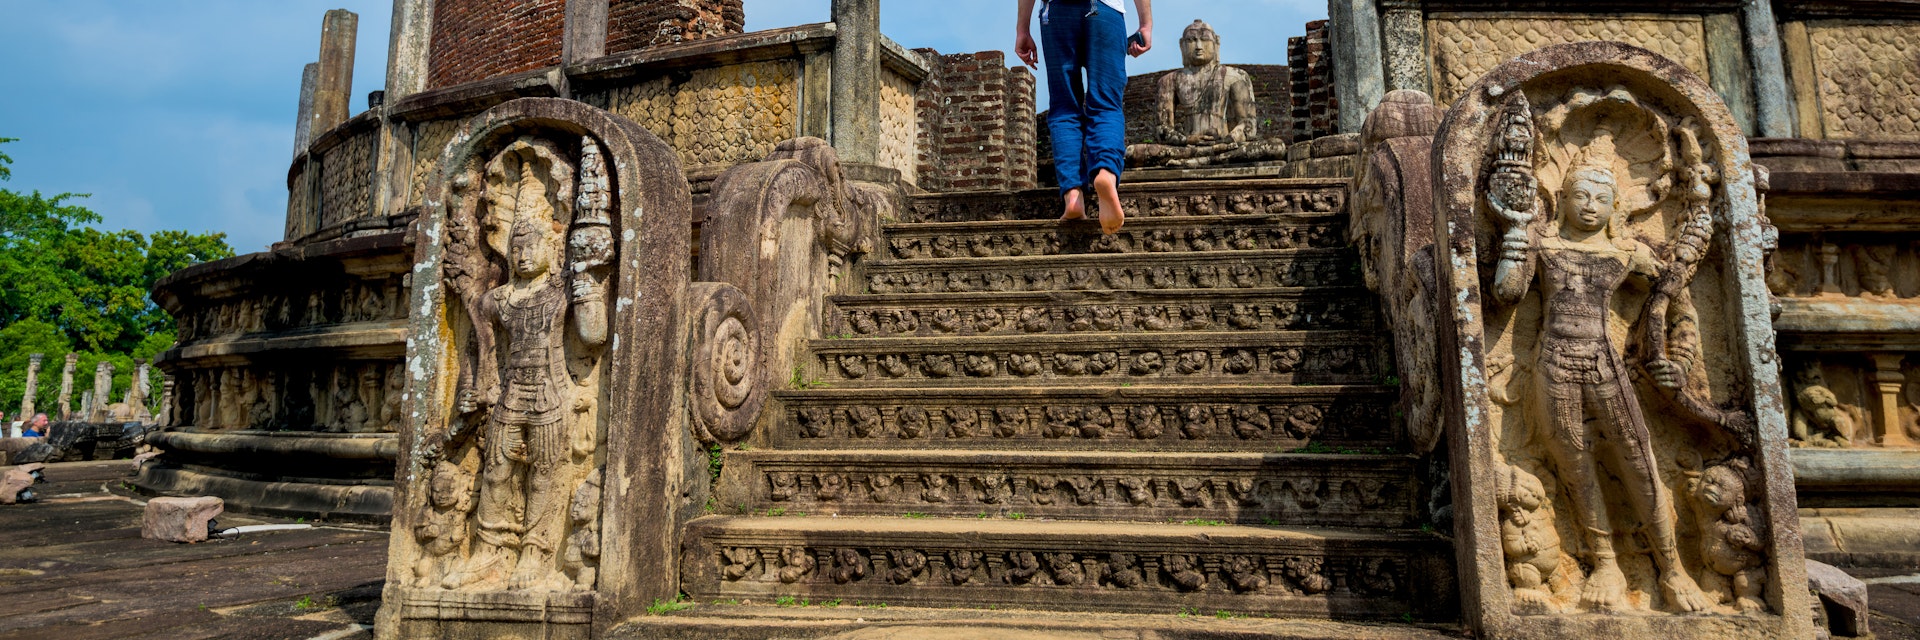 Ancient ruins. Polonnaruwa temple. Sri Lanka
563001901
historical, sculpture, ruins, travel, carving, rock, landmark, buddhist, religious, tourist, unesco, heritage, architecture, city, temple, tourism, religion, buddha, attractions, ancient, landscape, capital, sri lanka, vatadage, lanka, sri, srilanka, watadage, polonnaruwa